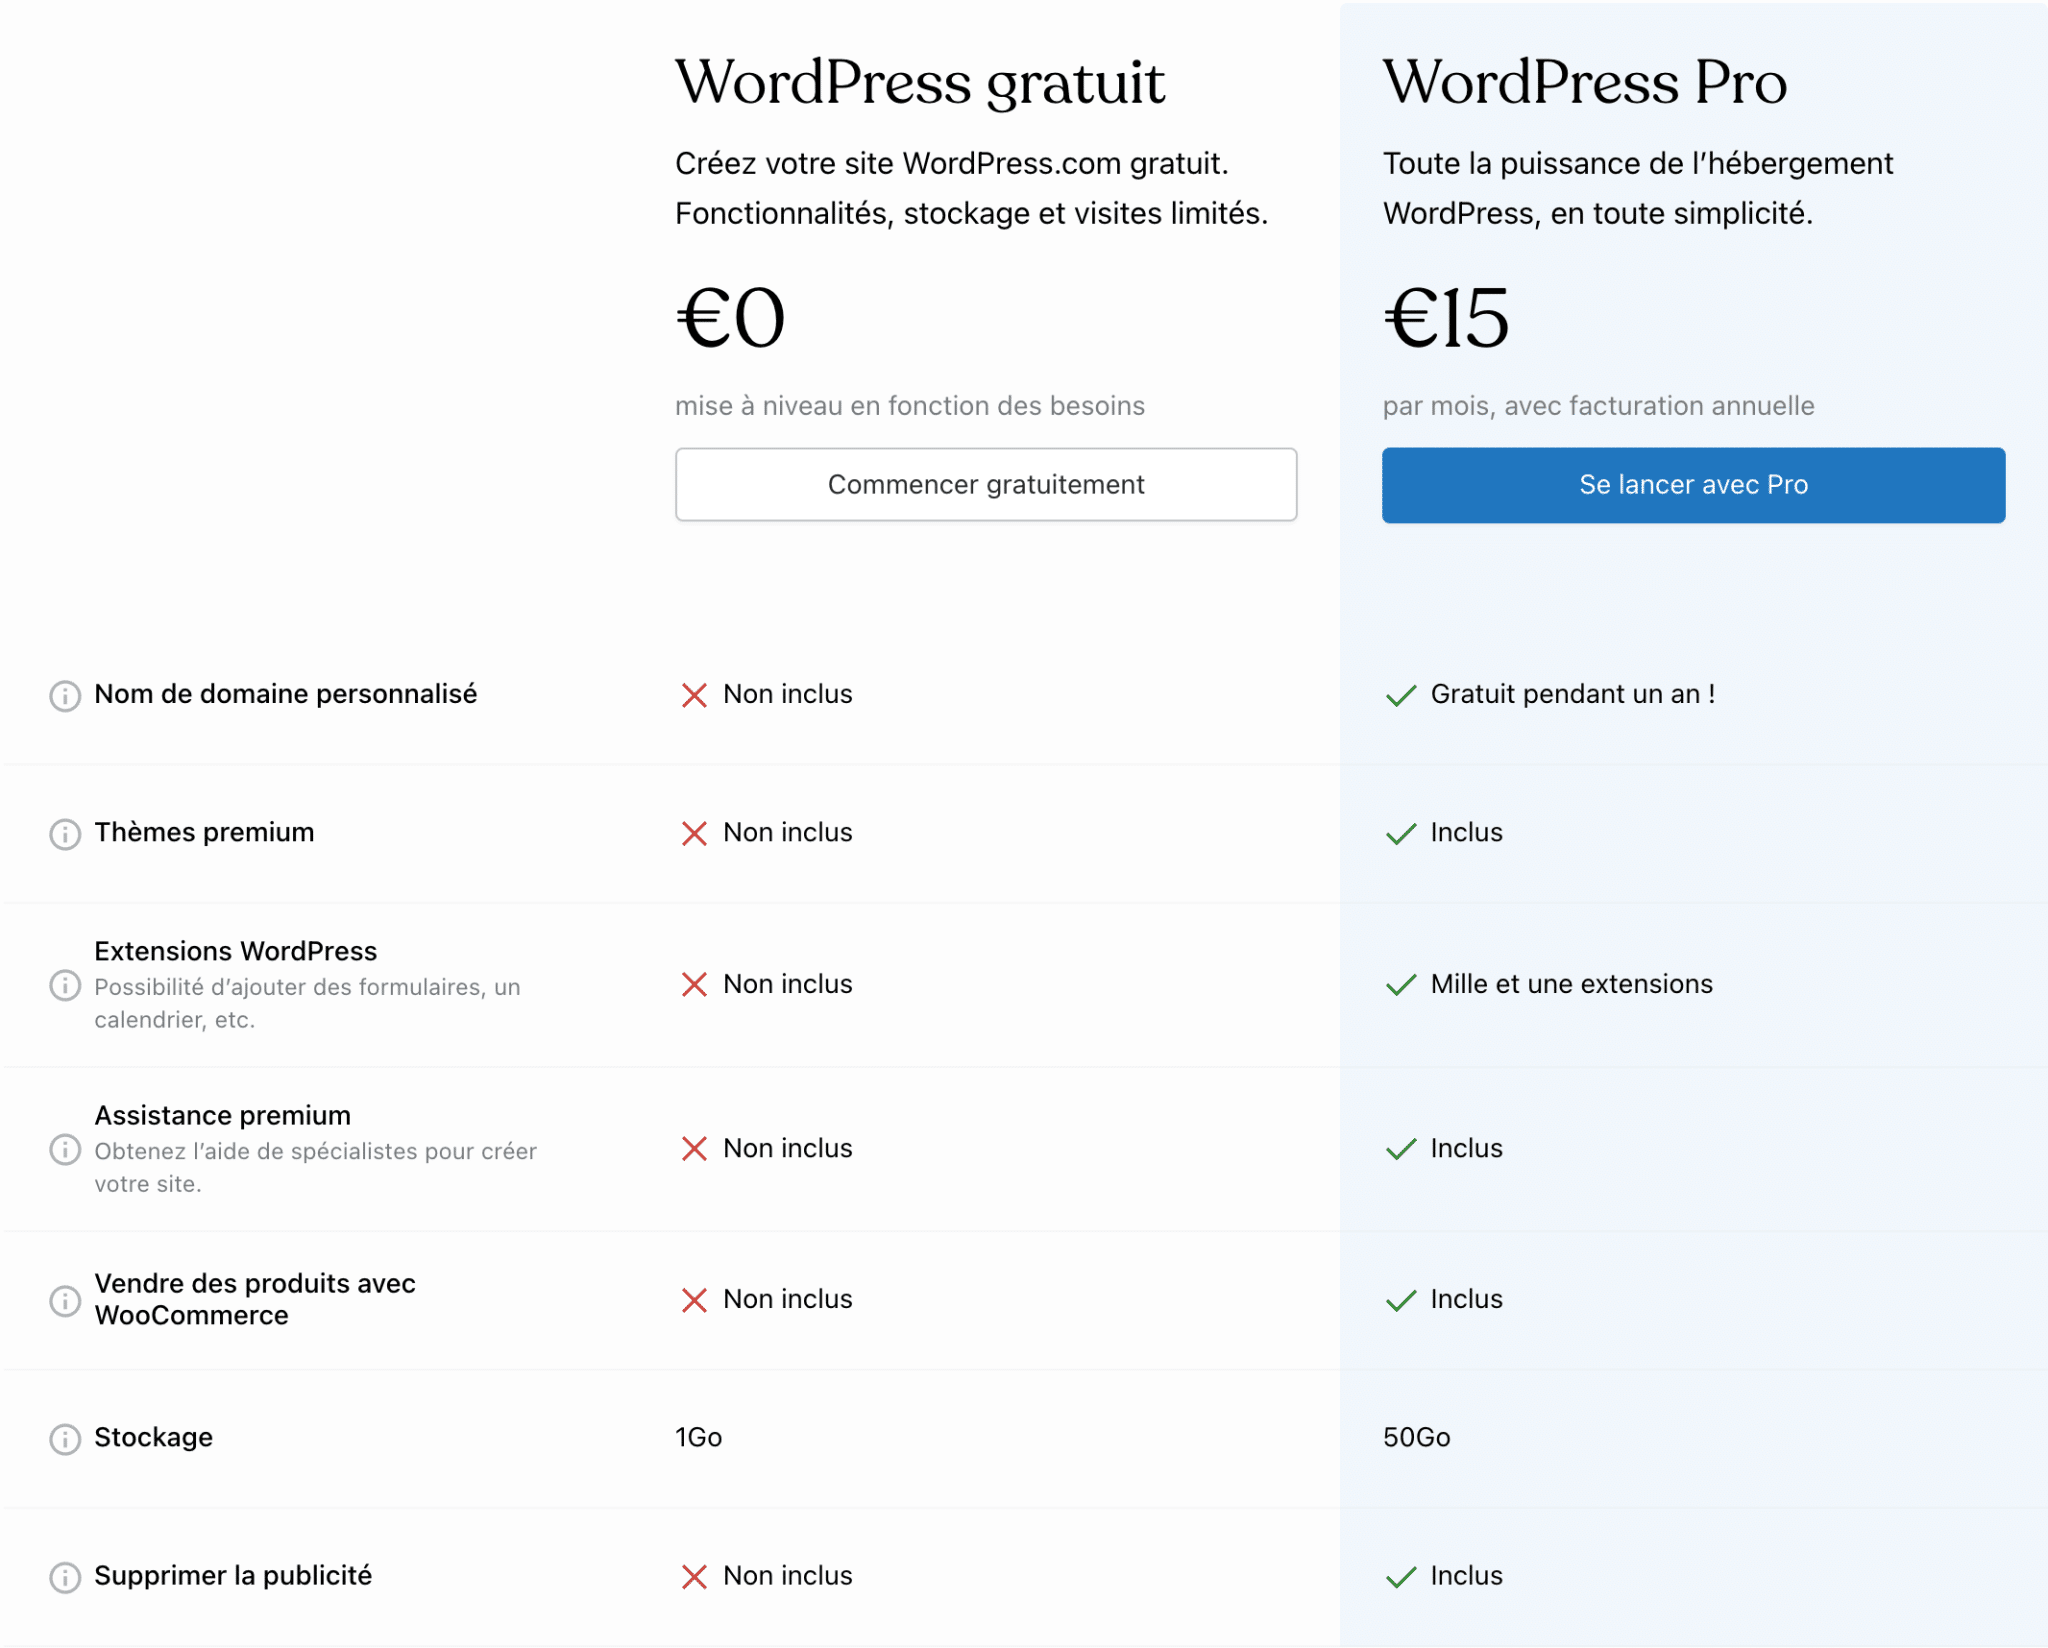 WordPress.com has a free plan and a paid plan.